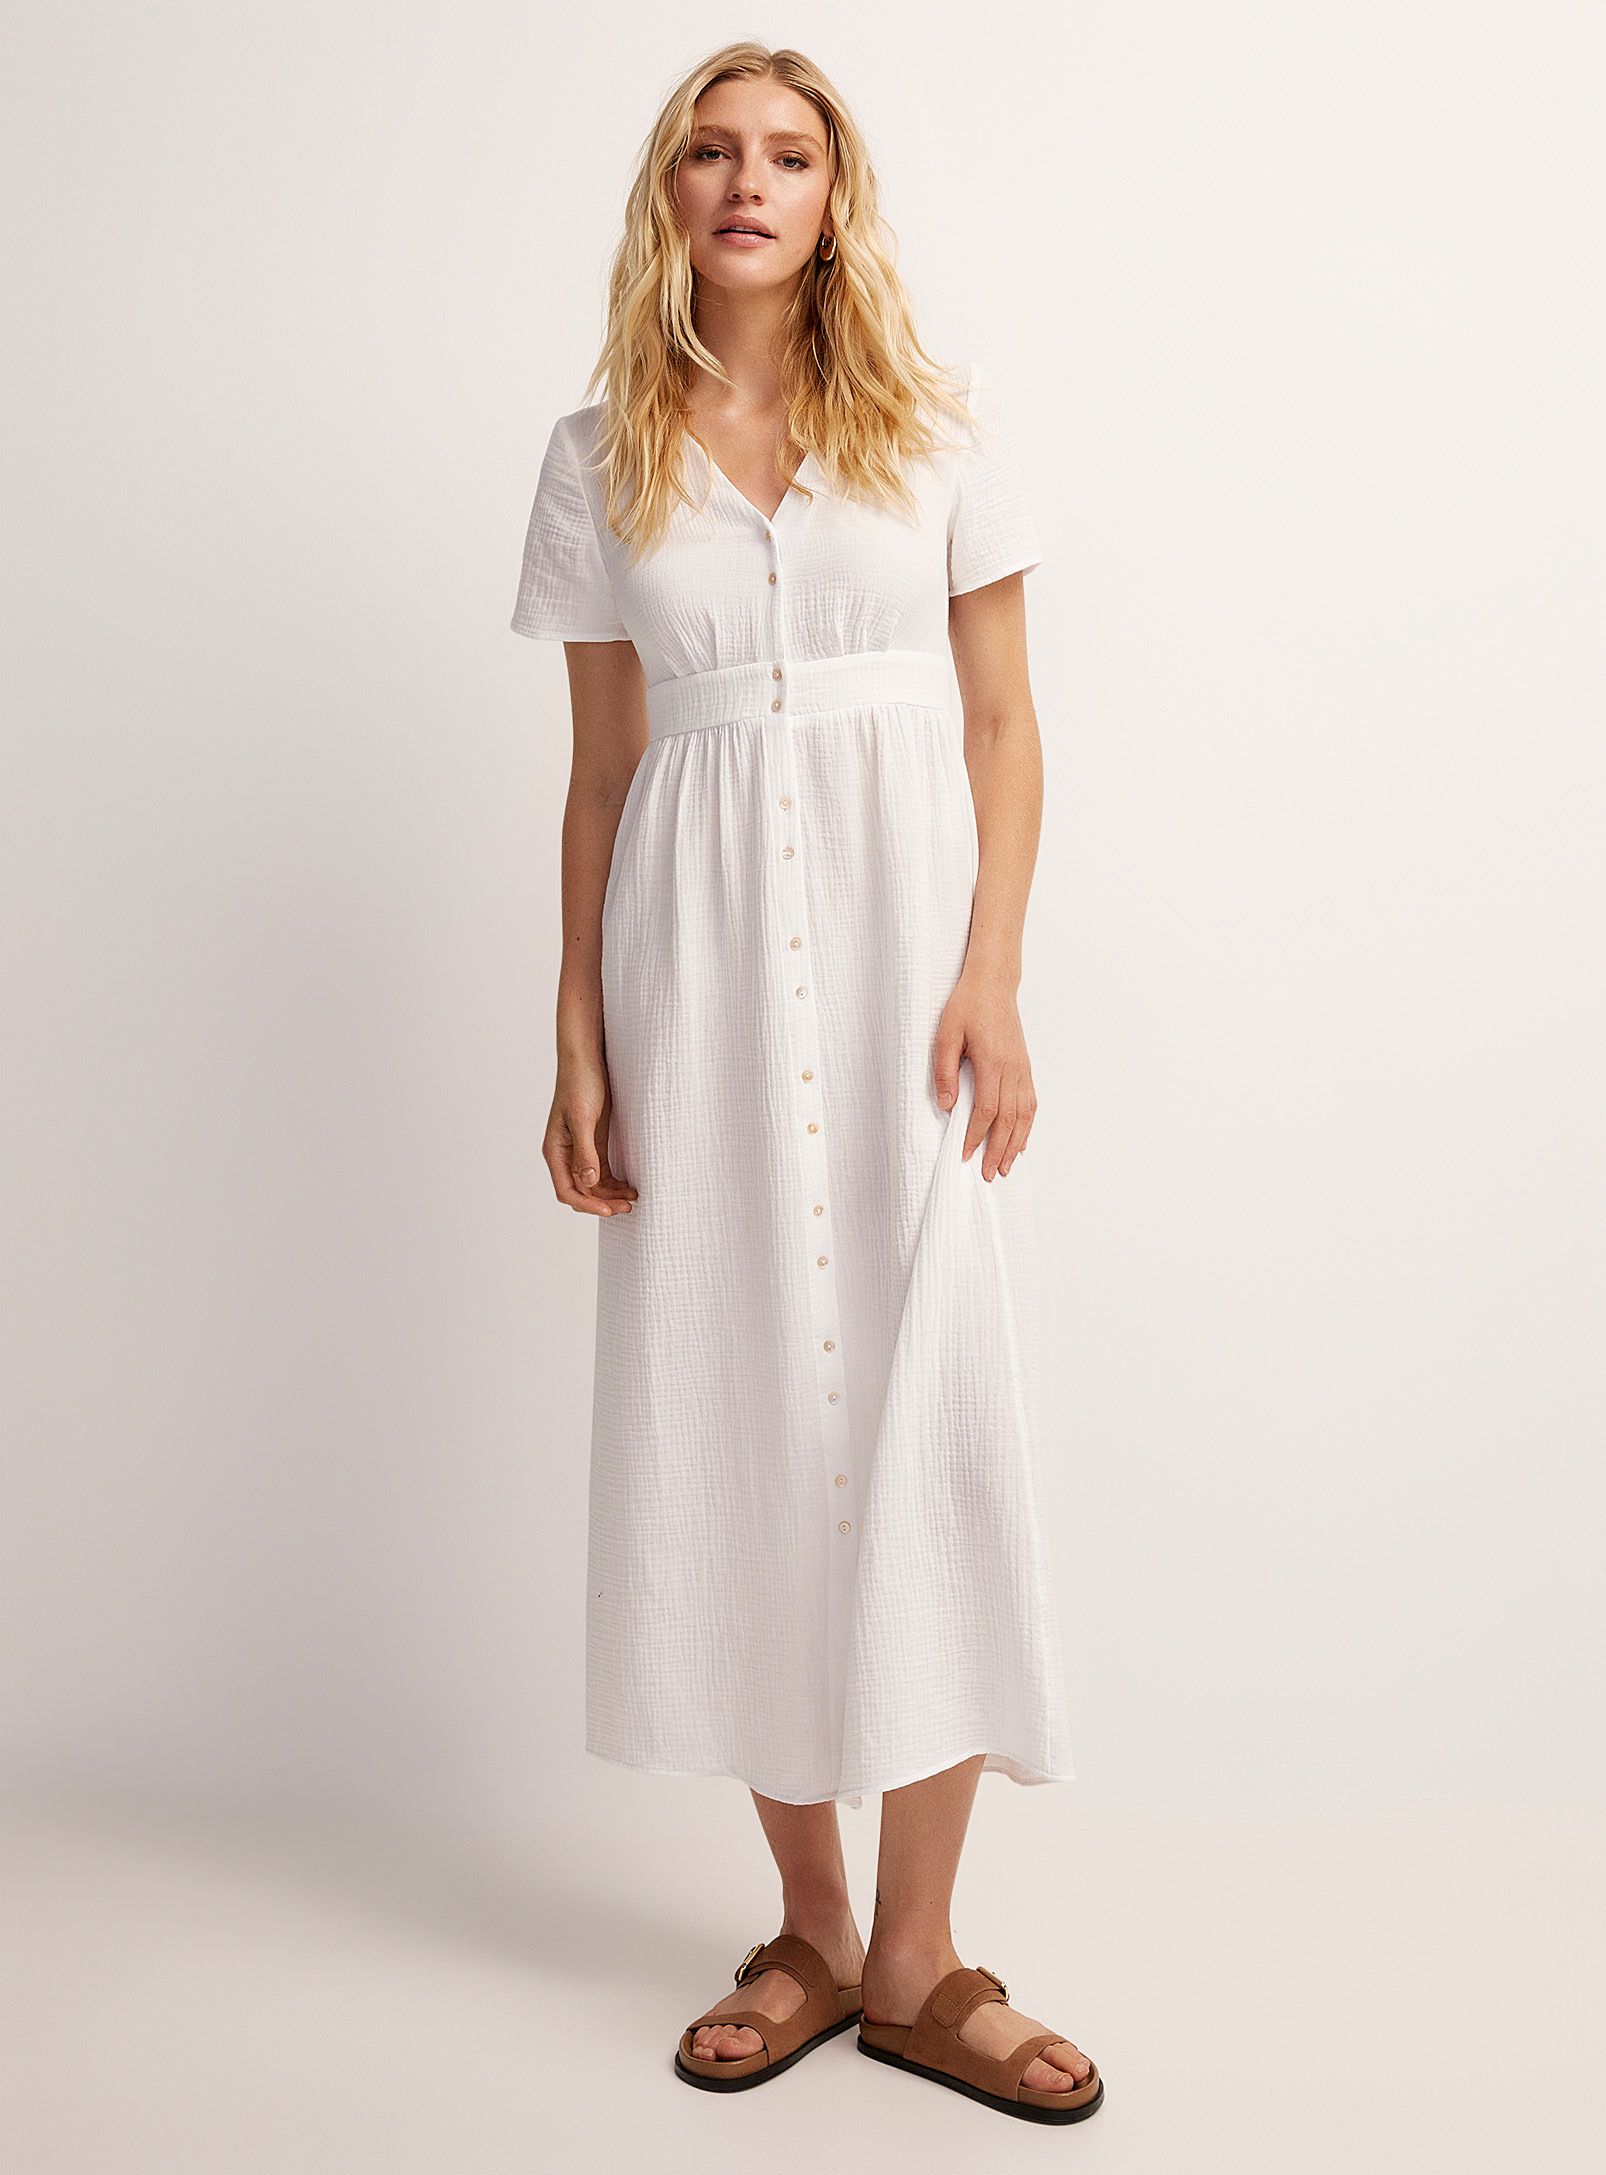 Vero Moda - Women's Cotton gauze maxi white buttoned dress